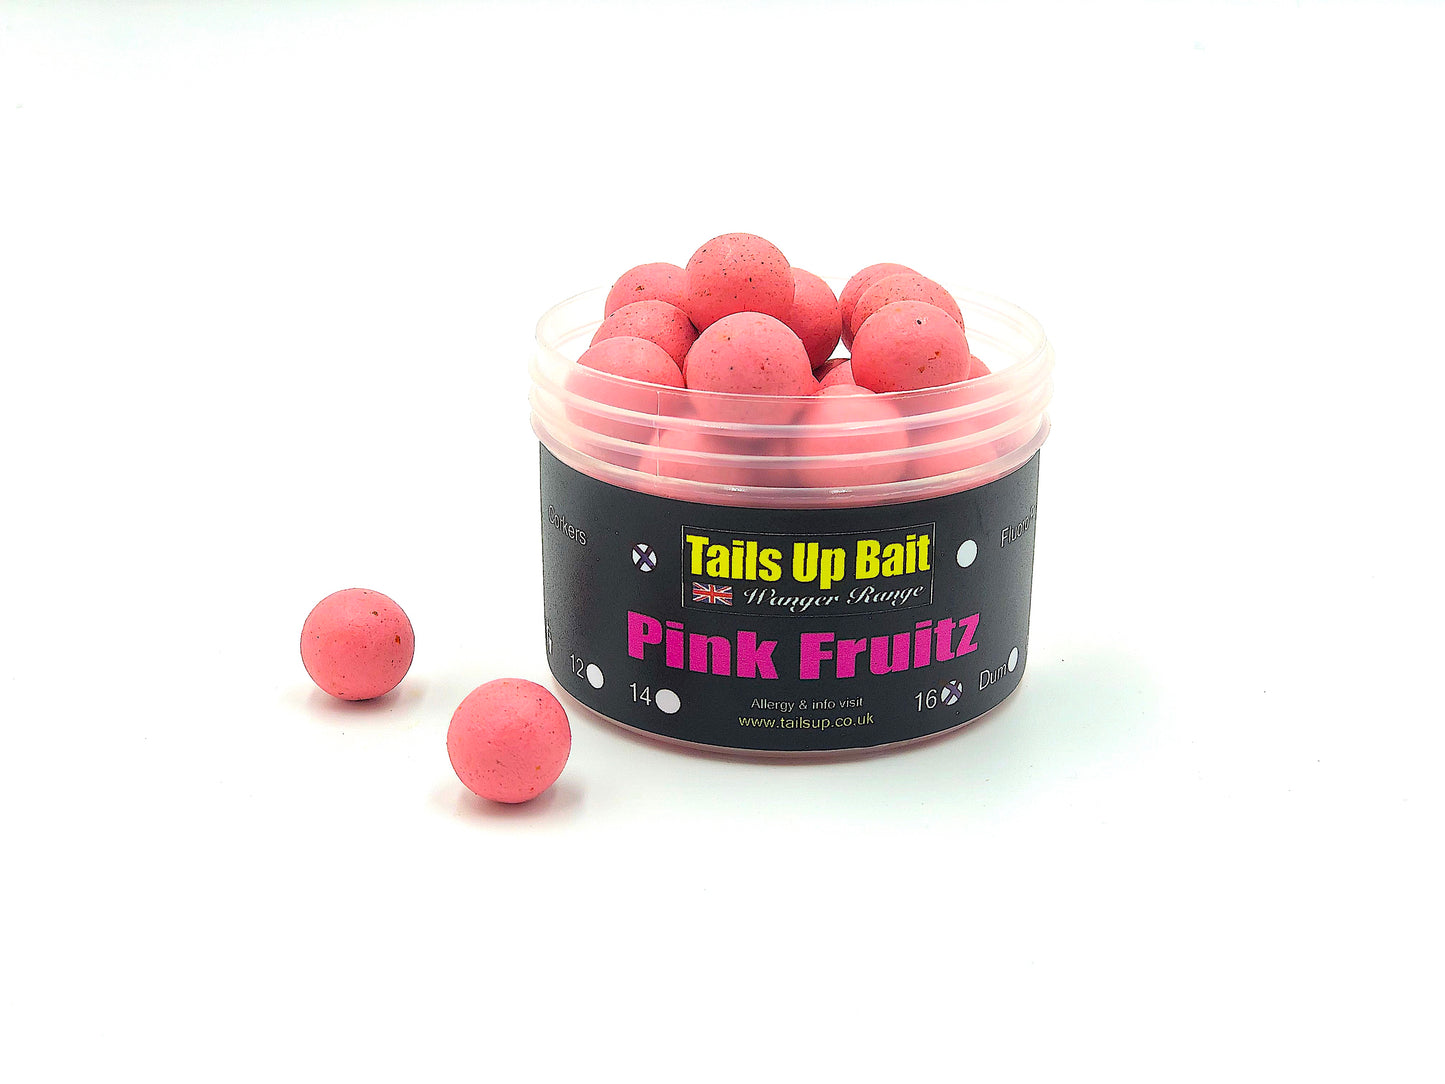 Pink Fruitz